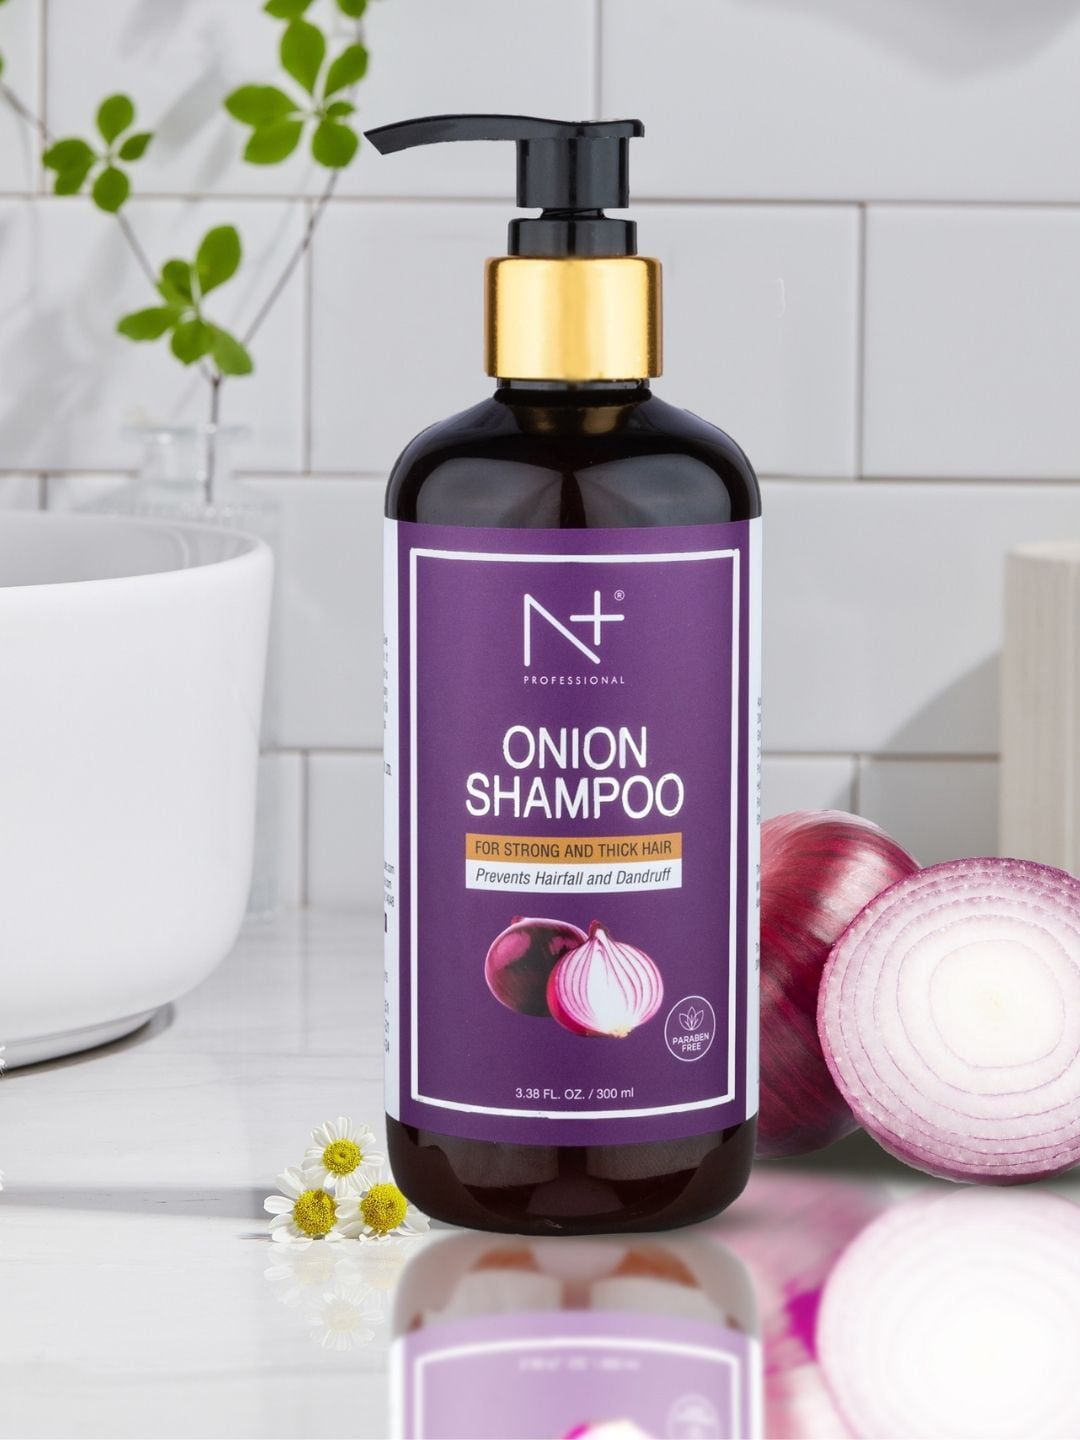 N Plus Professional Onion Shampoo with Tea Tree Oil - Prevents Hairfall & Dandruff - 300ml Price in India